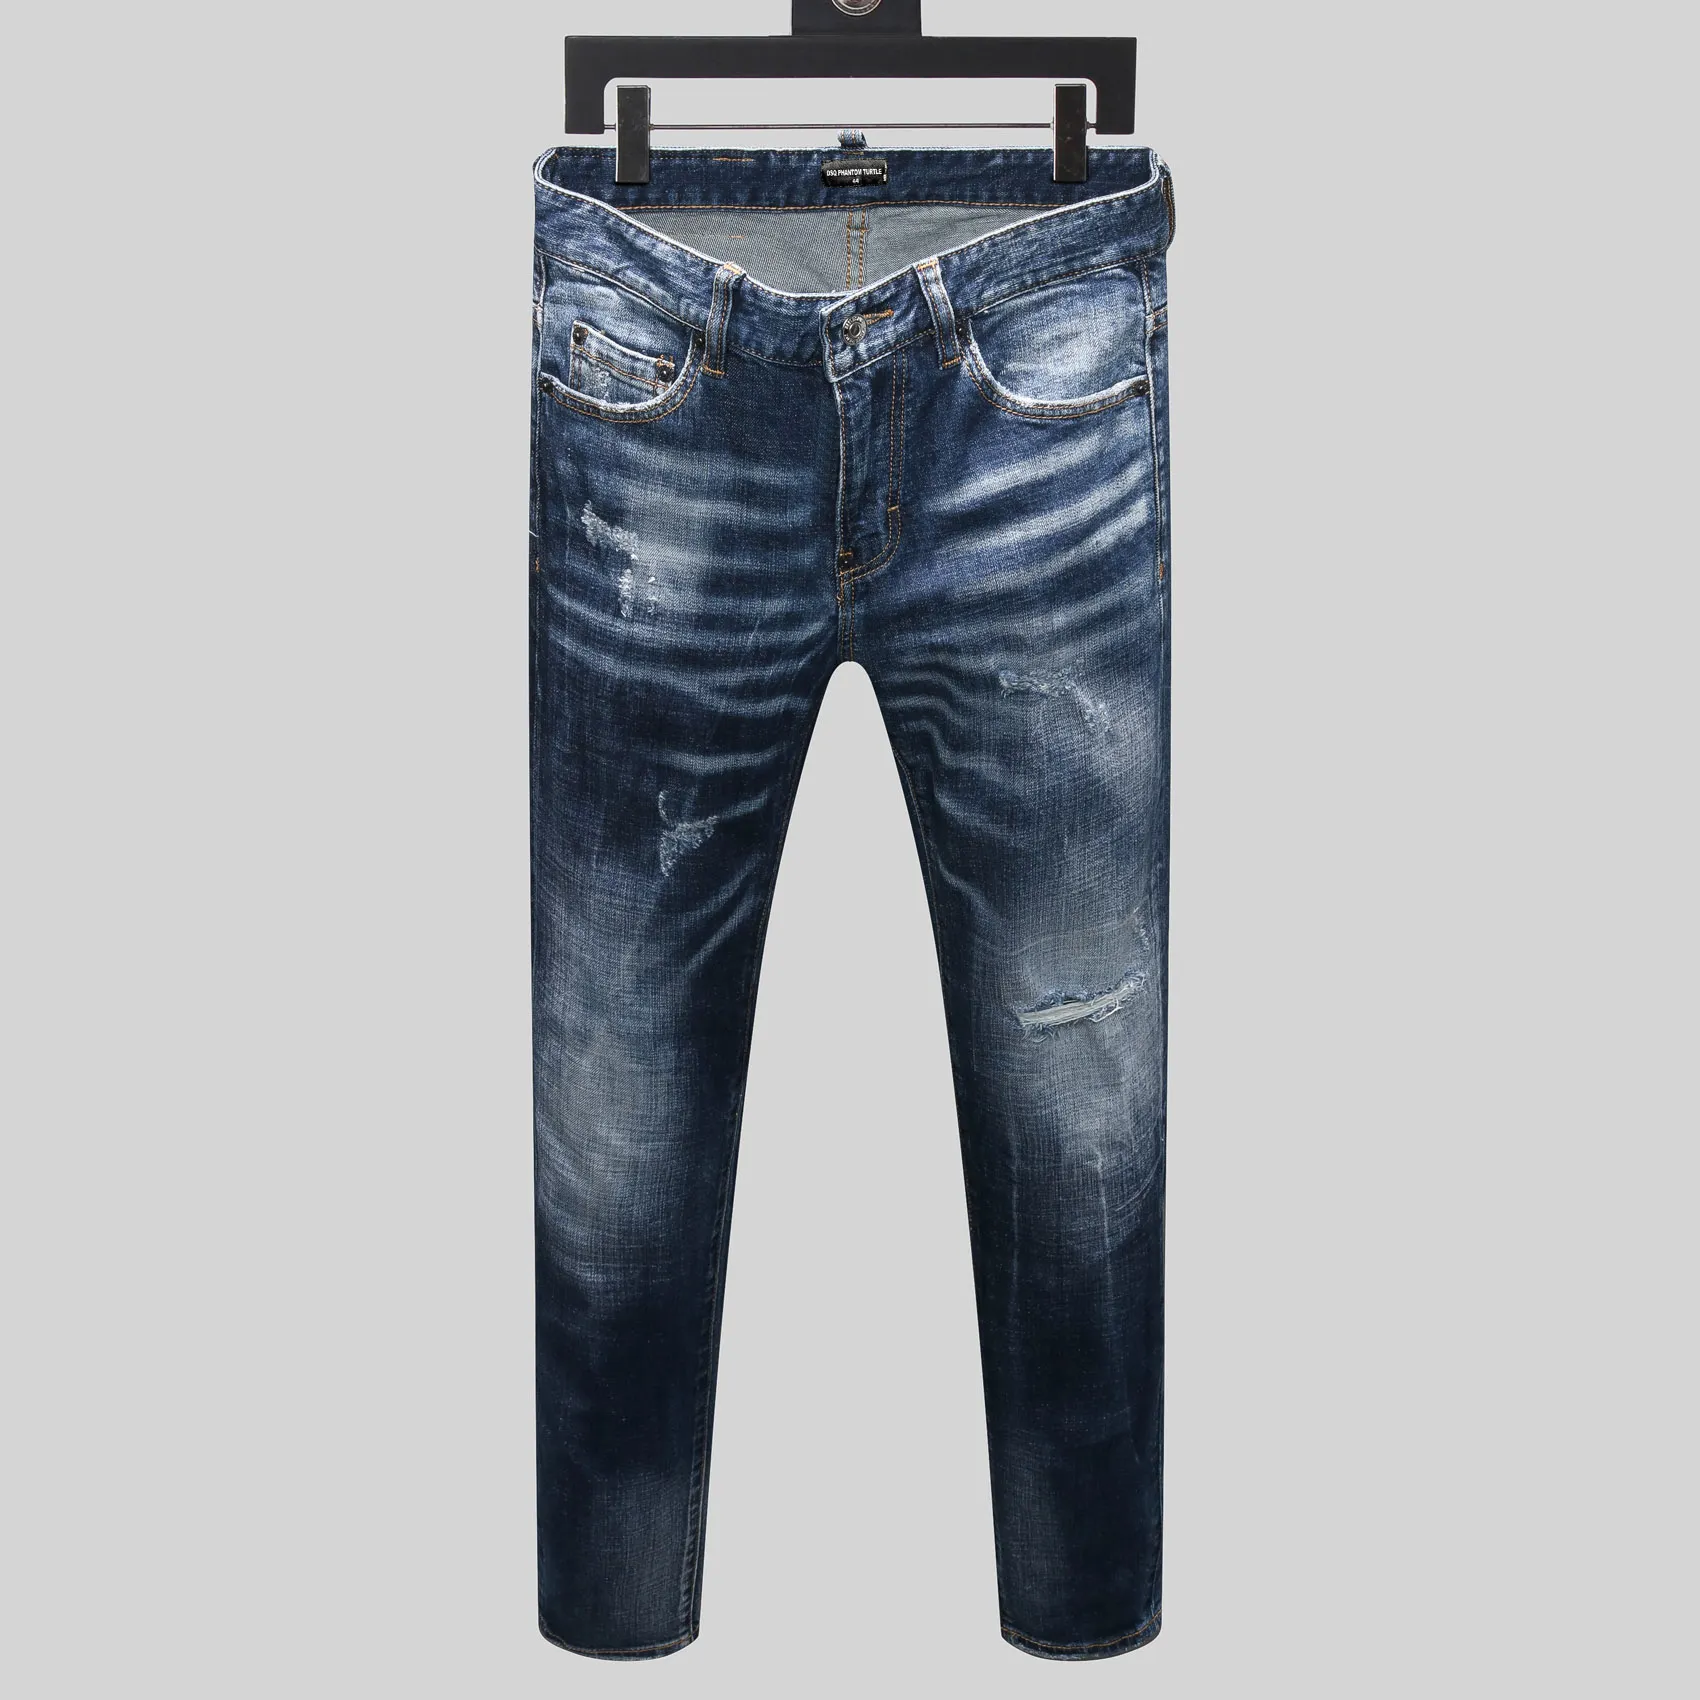 DSQ PHANTOM TURTLE Herren Jeans Herren Italienische Designer Jeans Skinny Ripped Cool Guy Causal Hole Denim Fashion Brand Fit Jeans Herren Washed Pants 65257